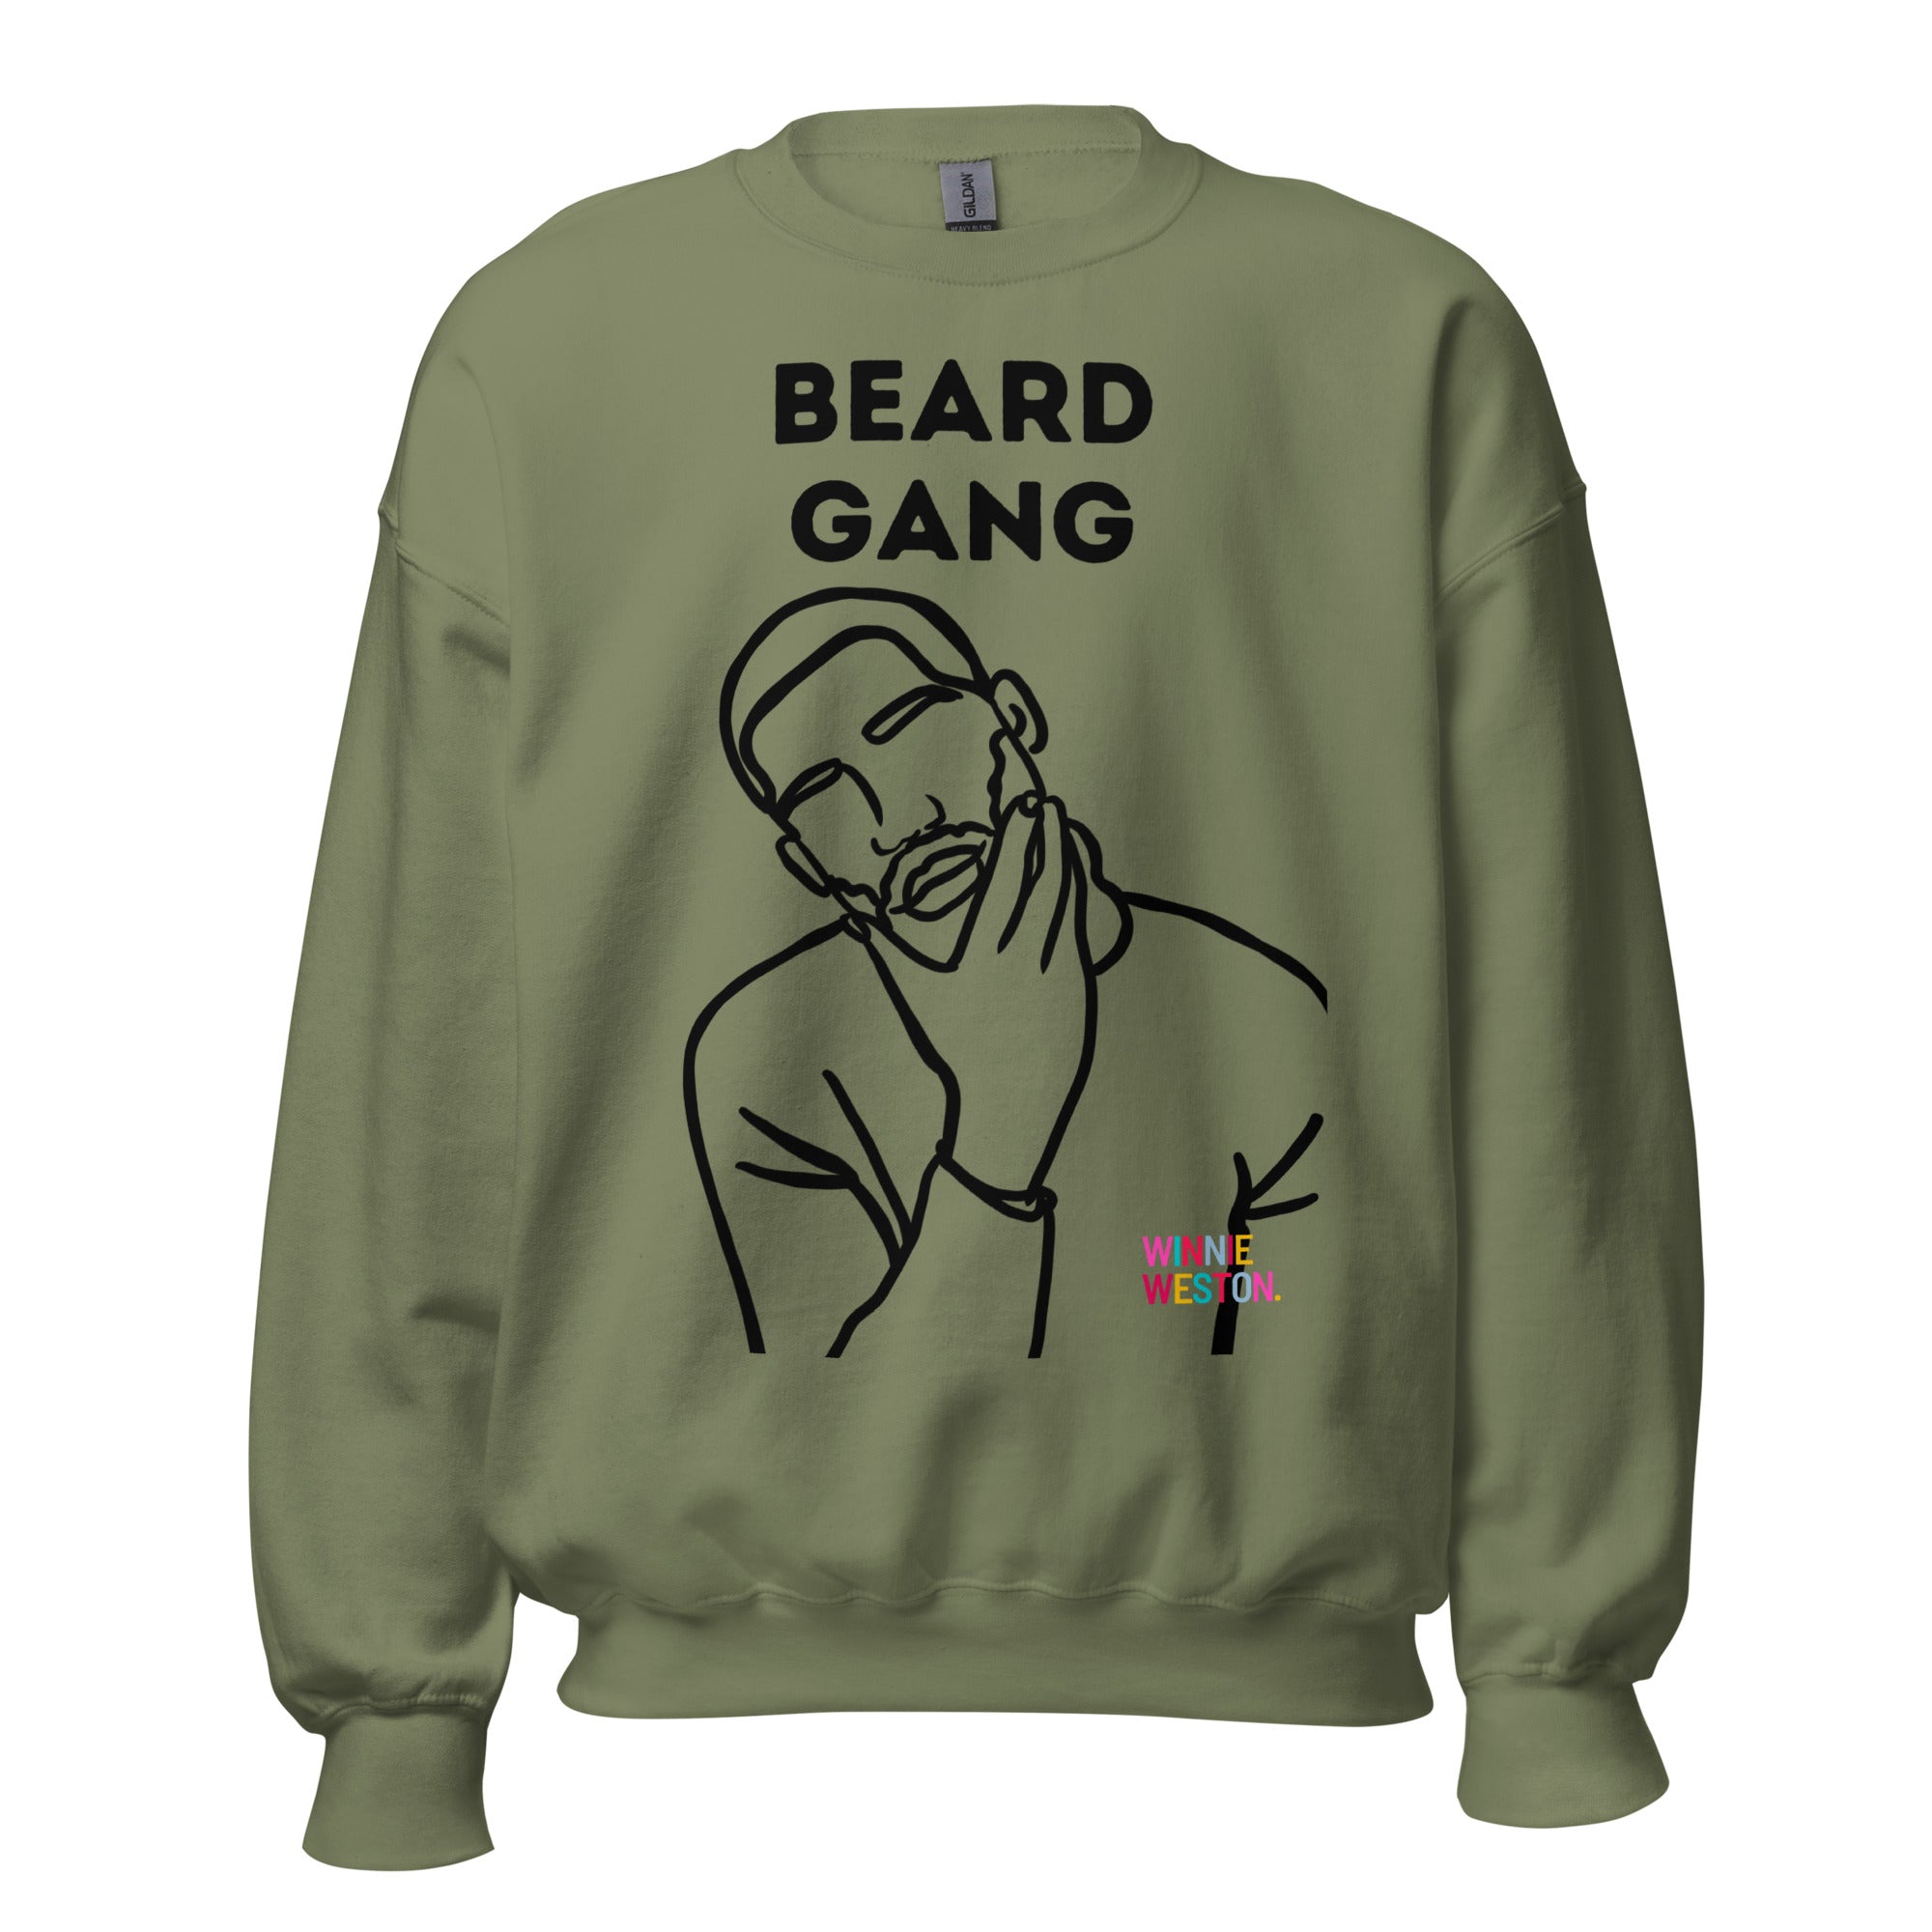 Beard Gang Sweatshirt